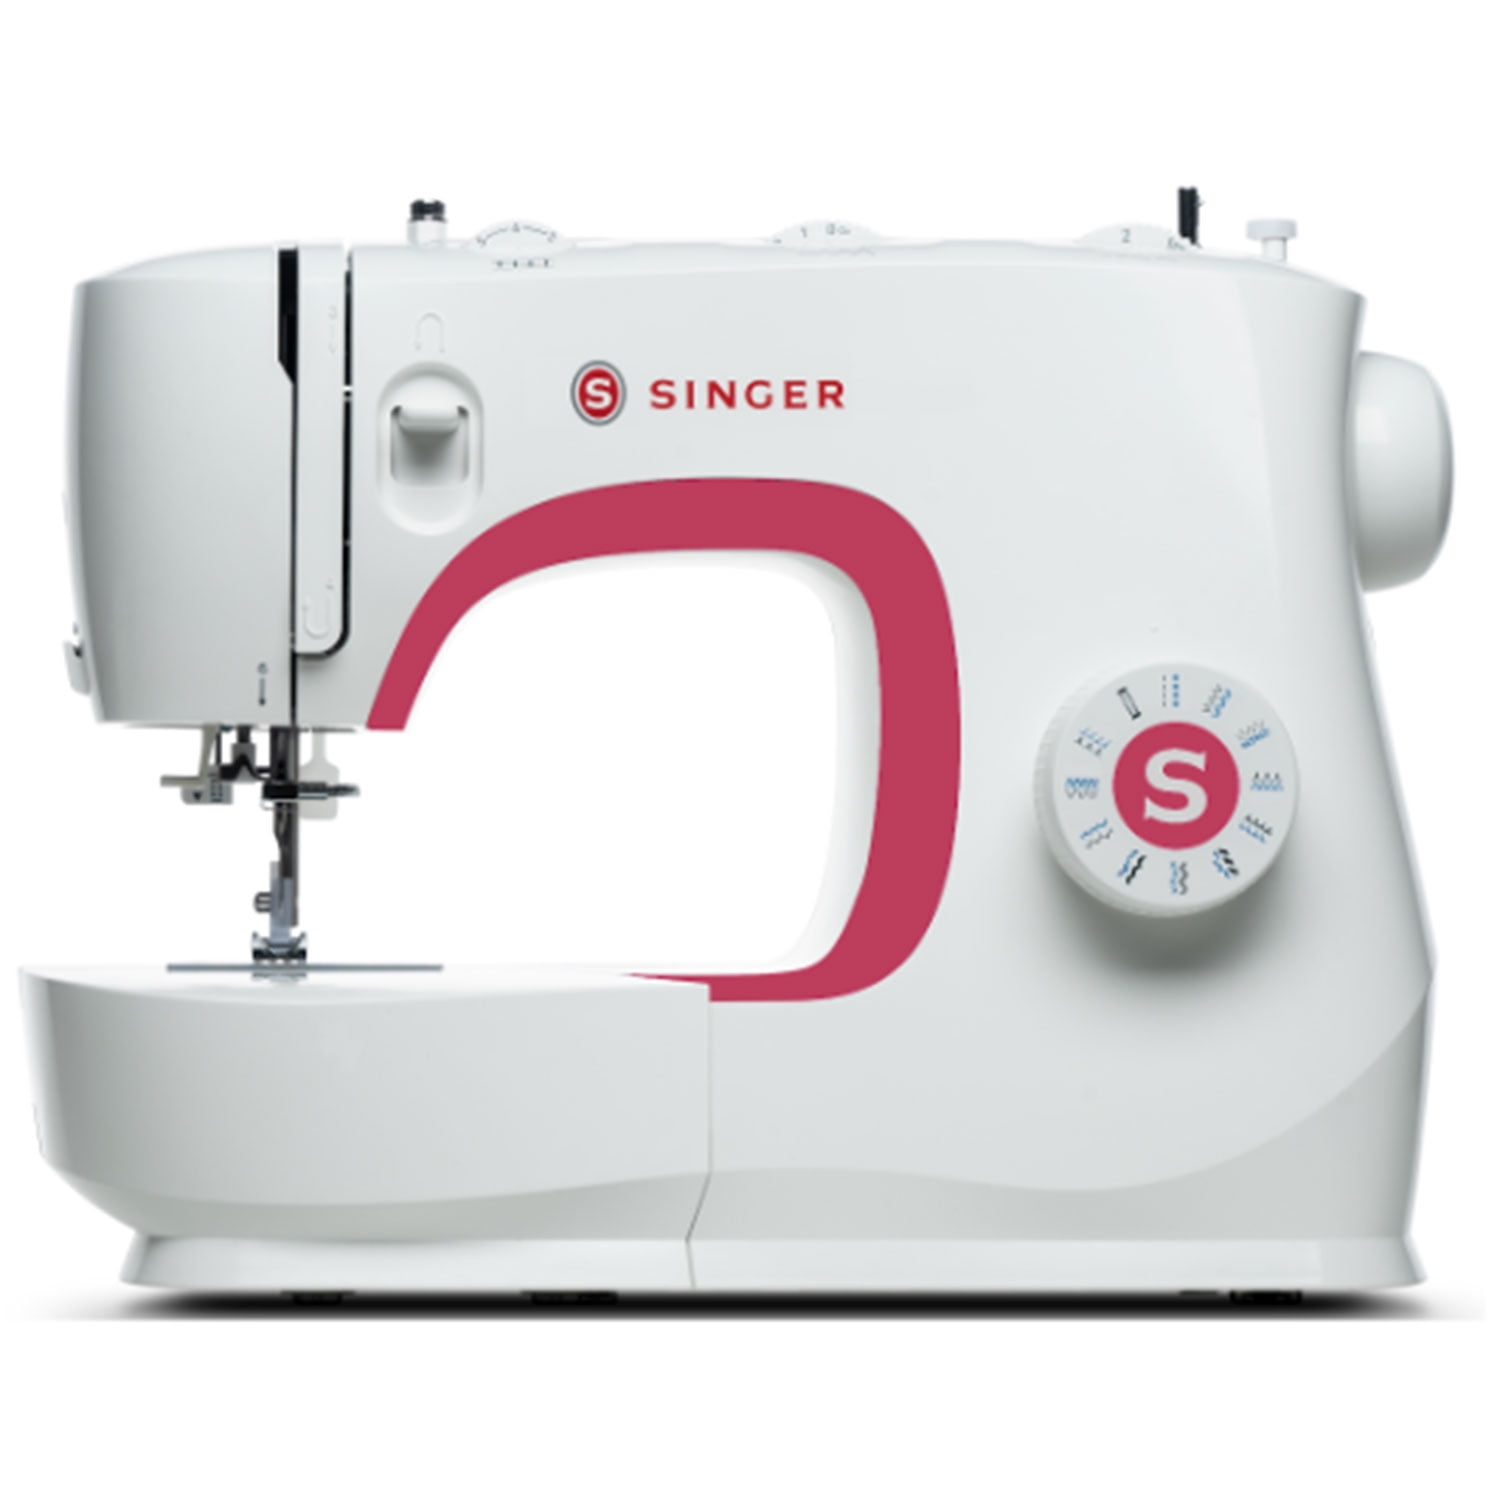 Singer MX231 Sewing Machine - White 